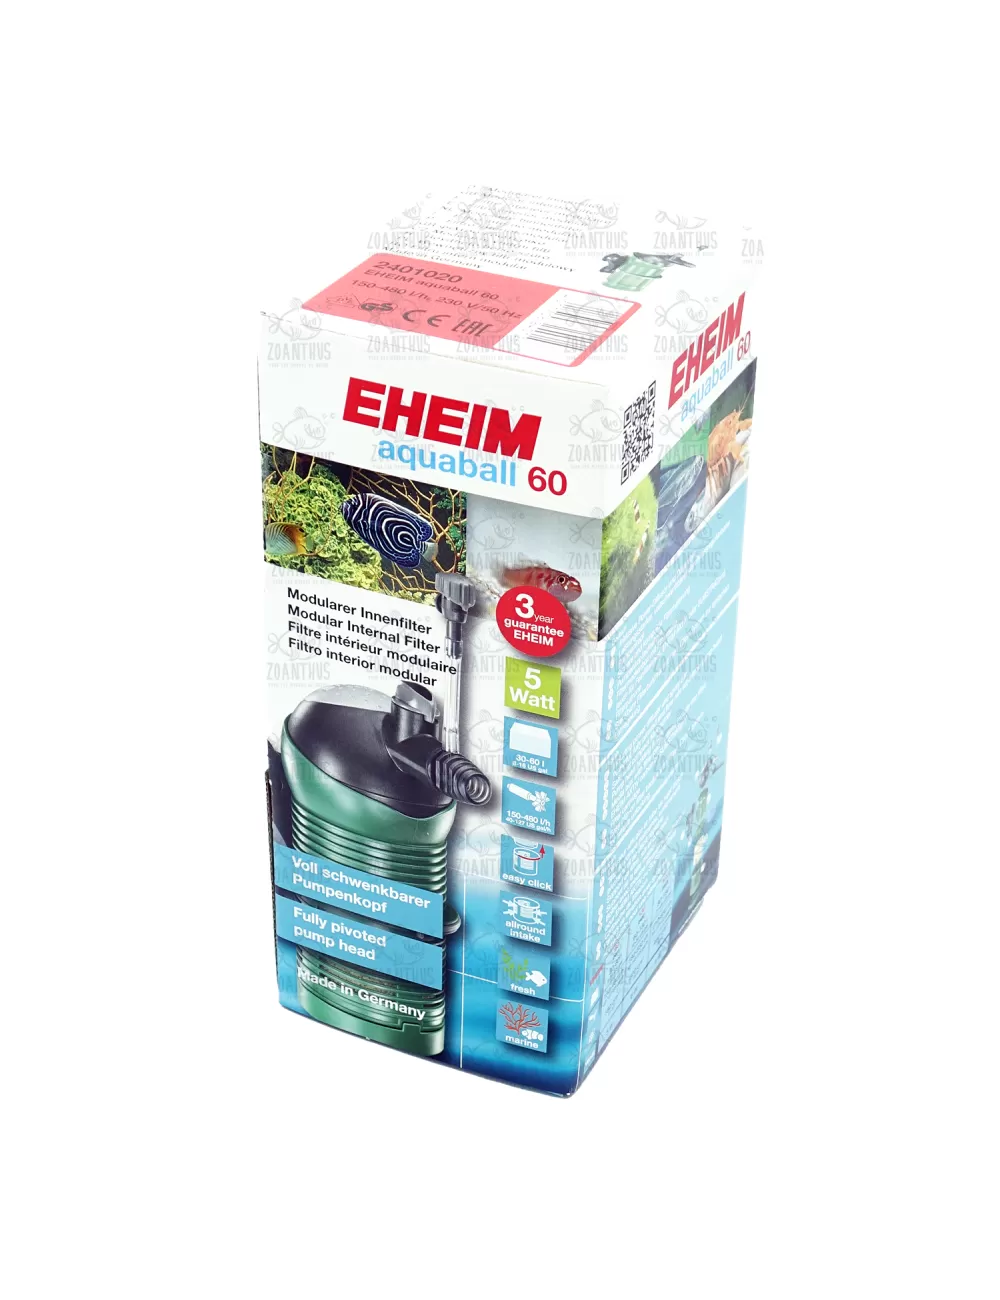 EHEIM - Aquaball 60 - Innenfilter für Aquarien bis 60 Liter